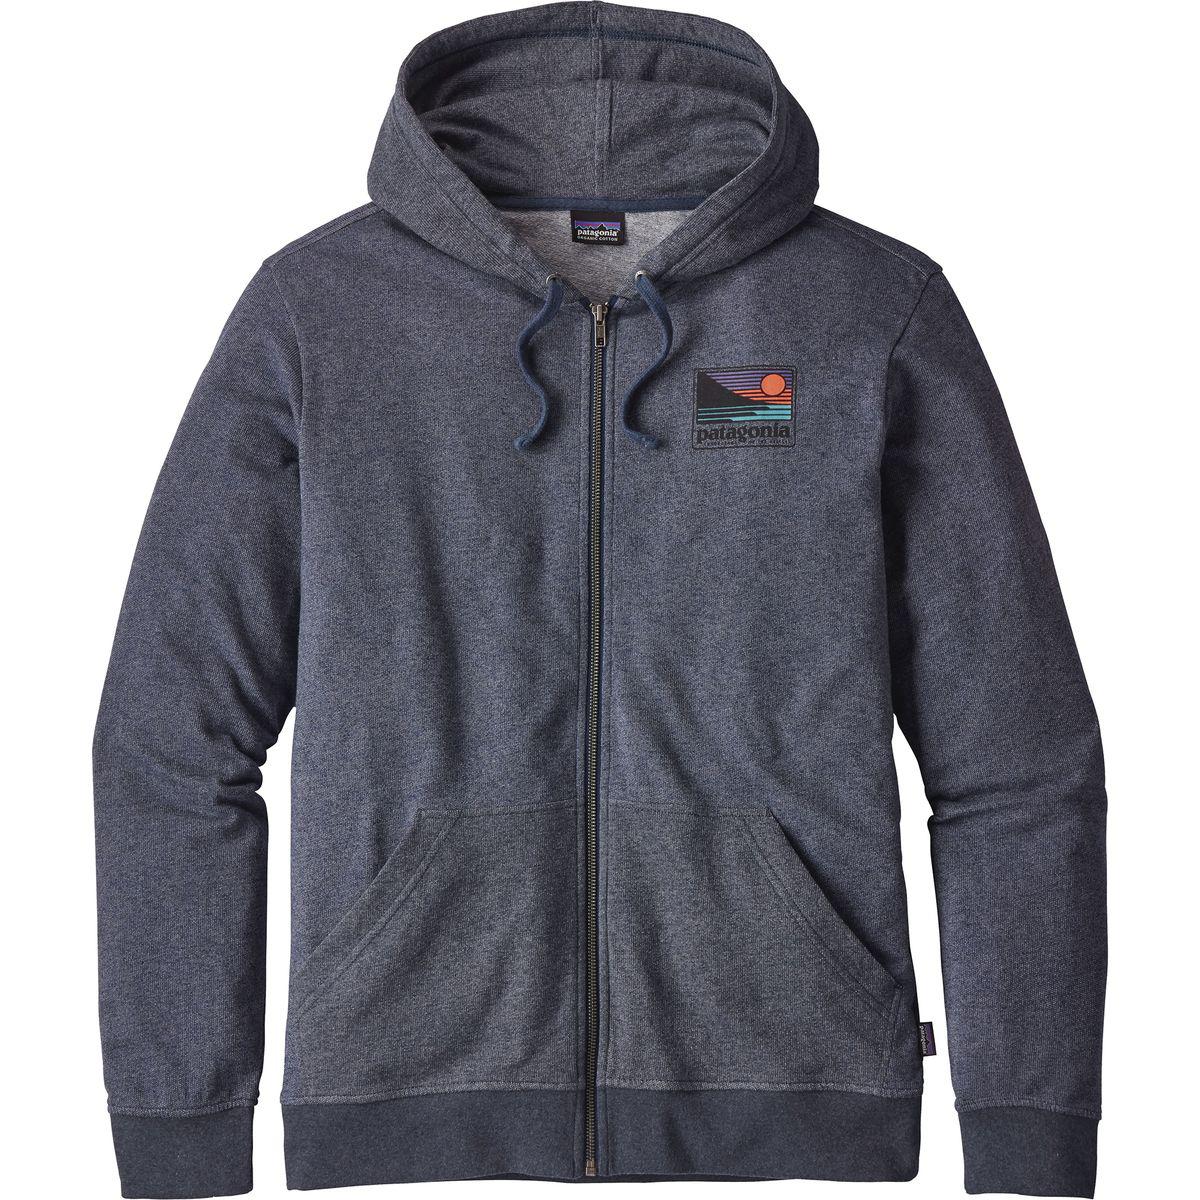 patagonia sweatshirt zip up